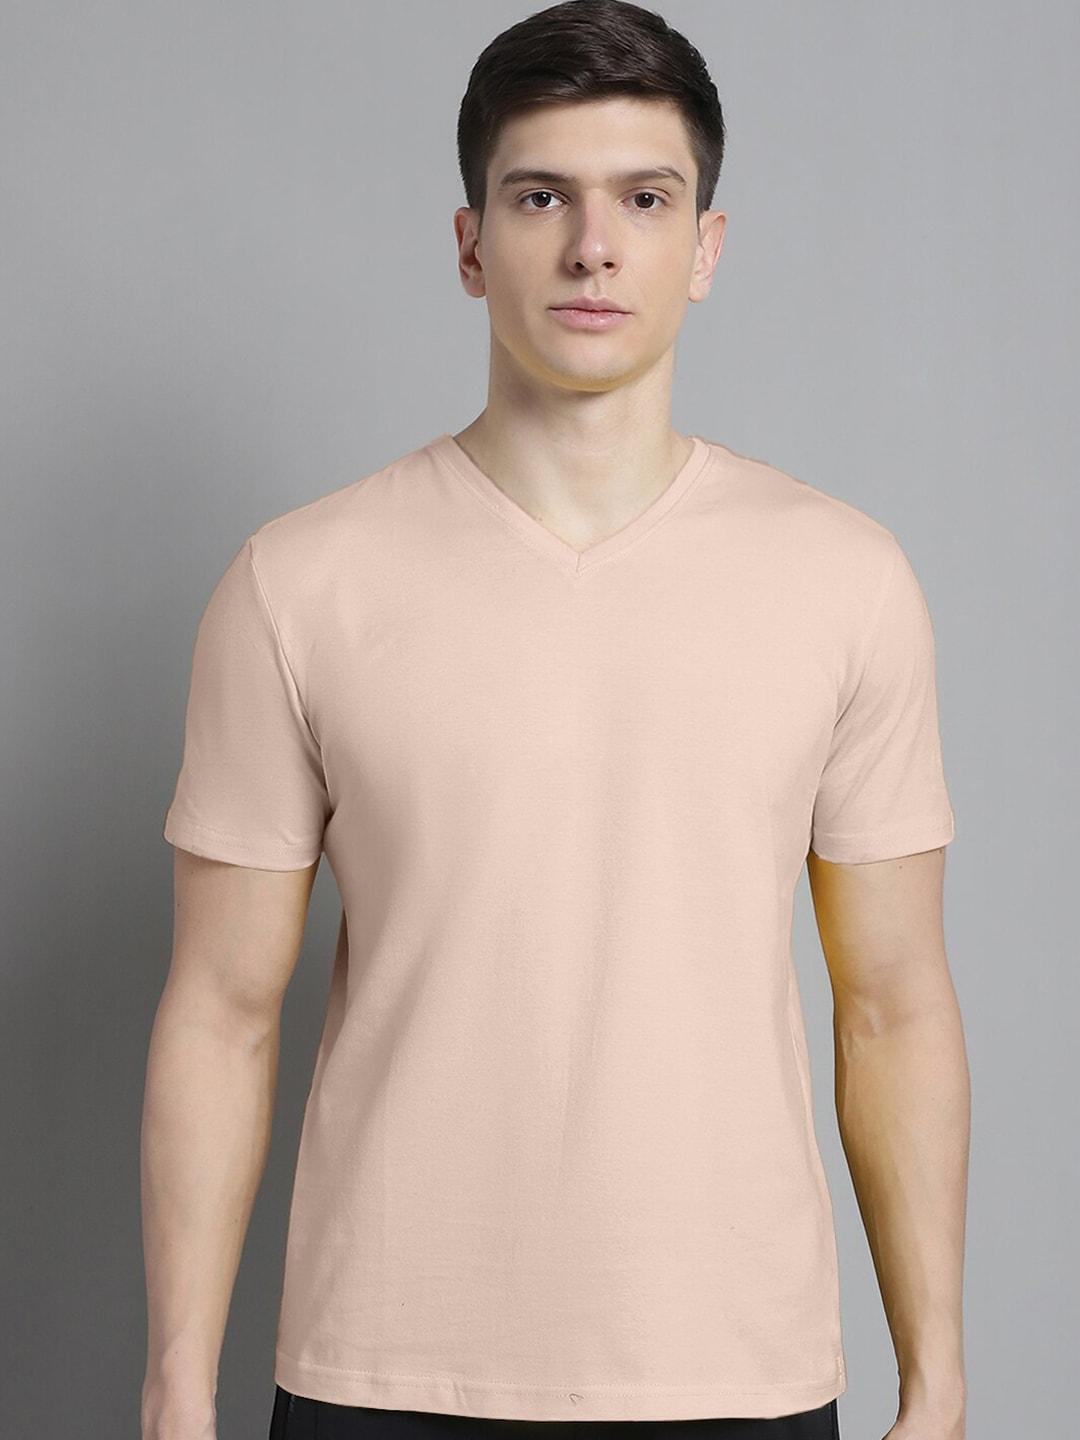 fbar v-neck short sleeves slim fit pure cotton t-shirt